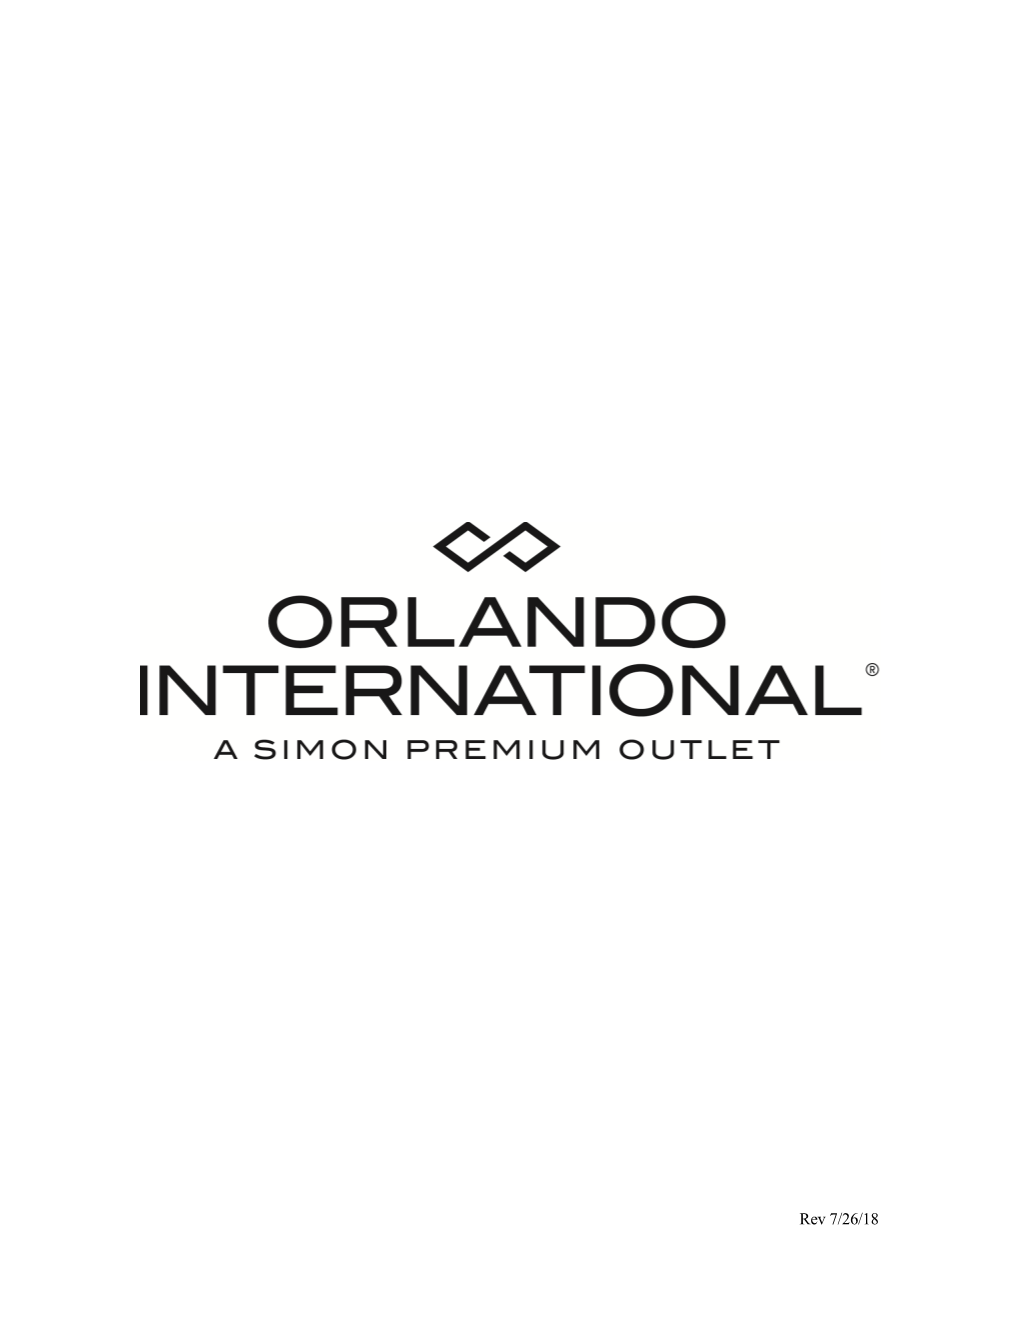 Orlandointernational Premium Outlets